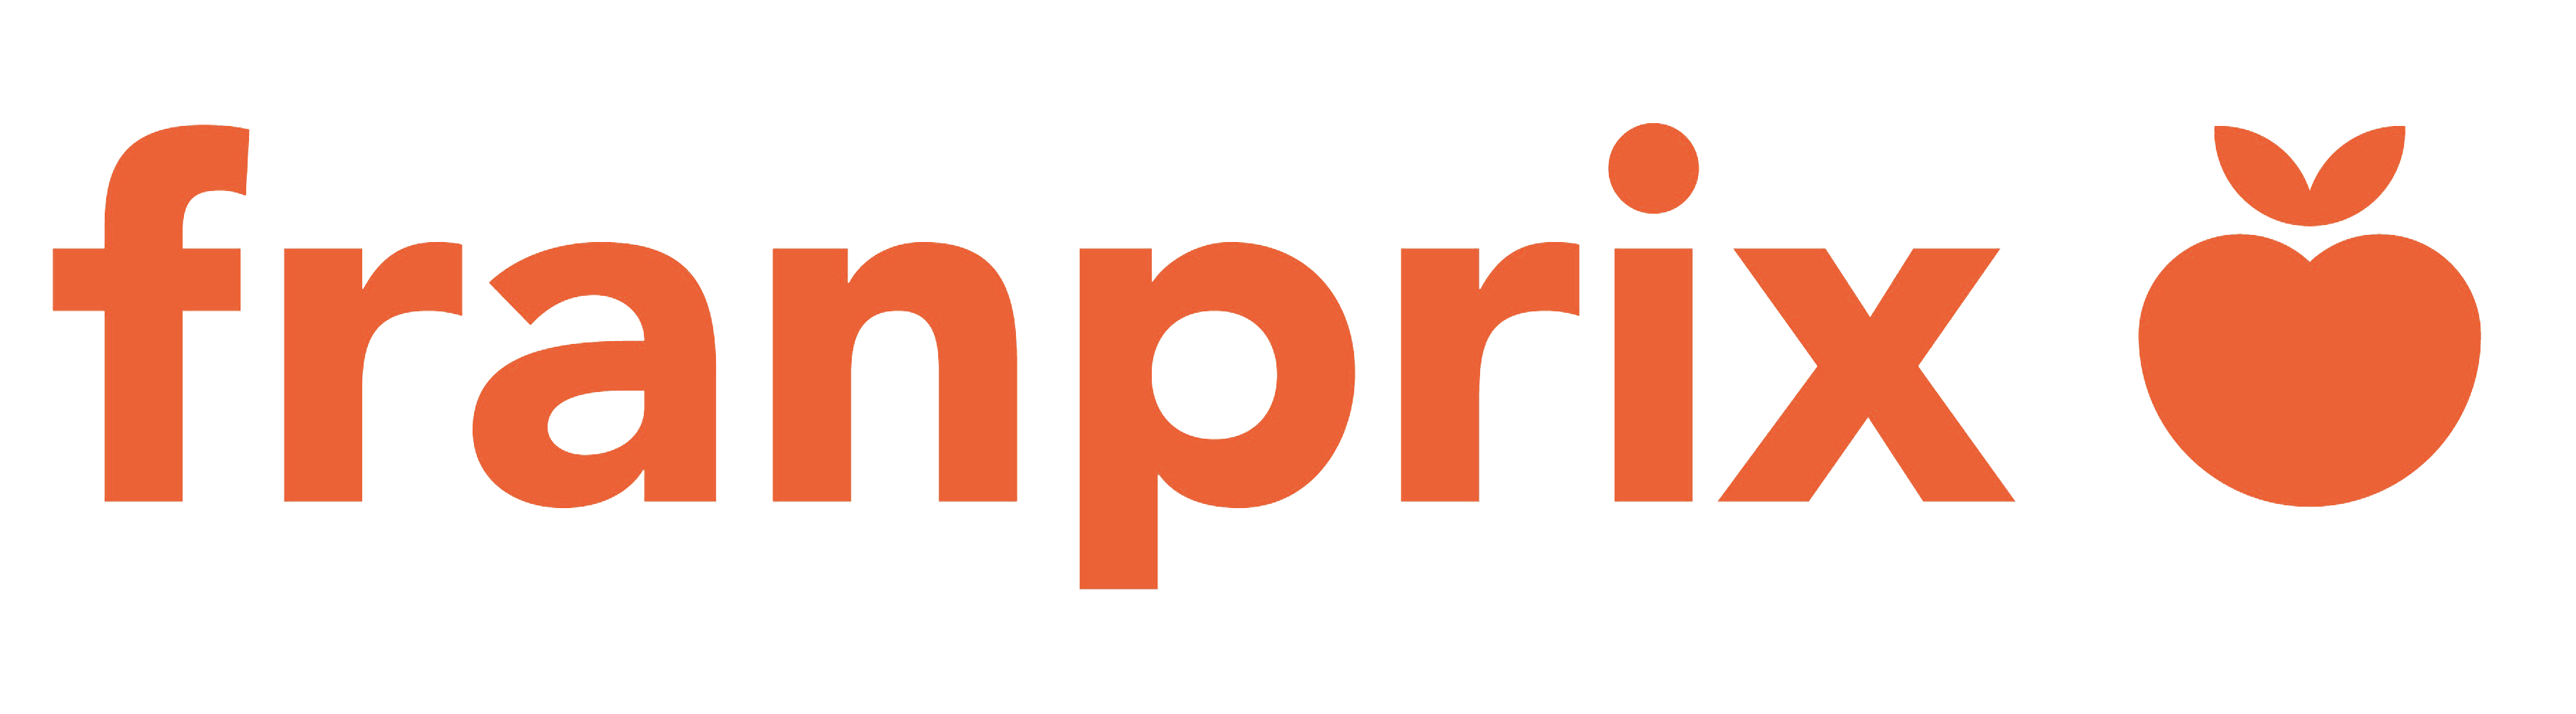 Fichier:Logo Franprix 2015.png — Wikipédia